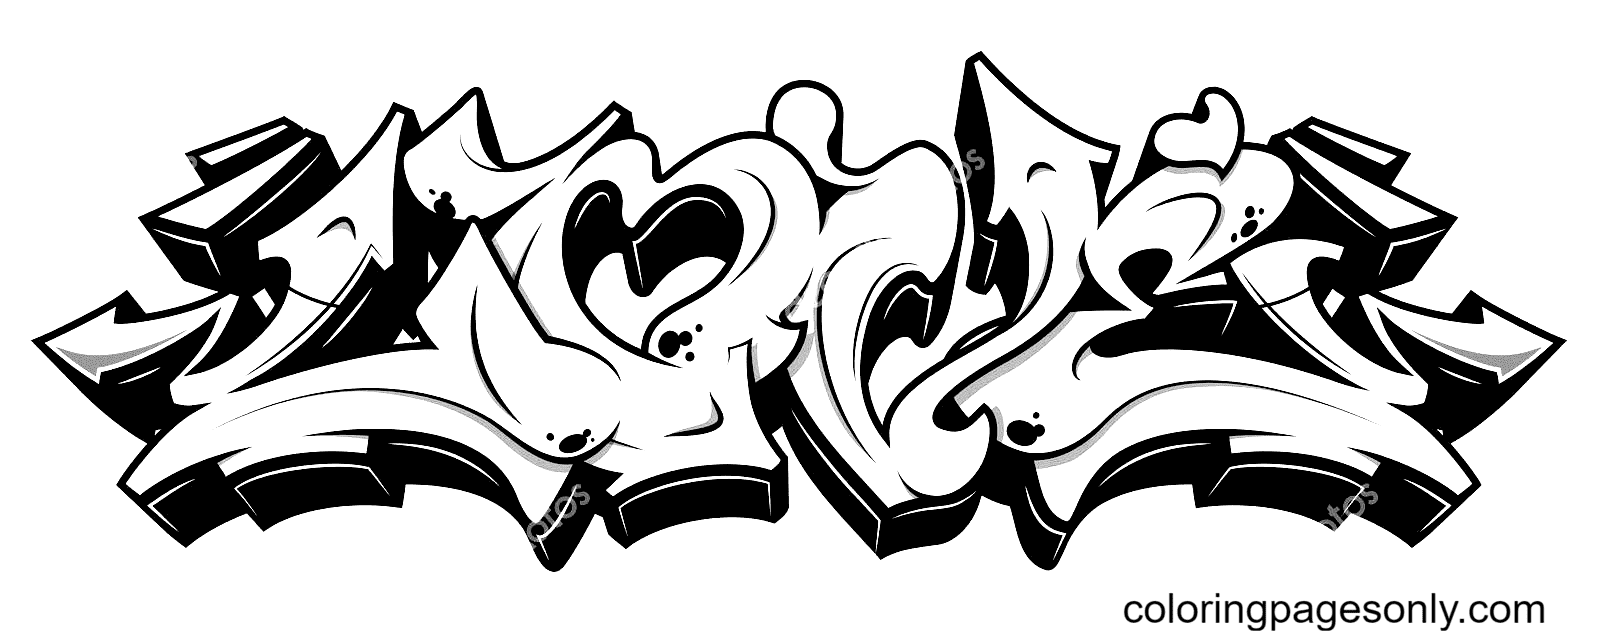 Liefde in Graffiti-stijl van Graffiti